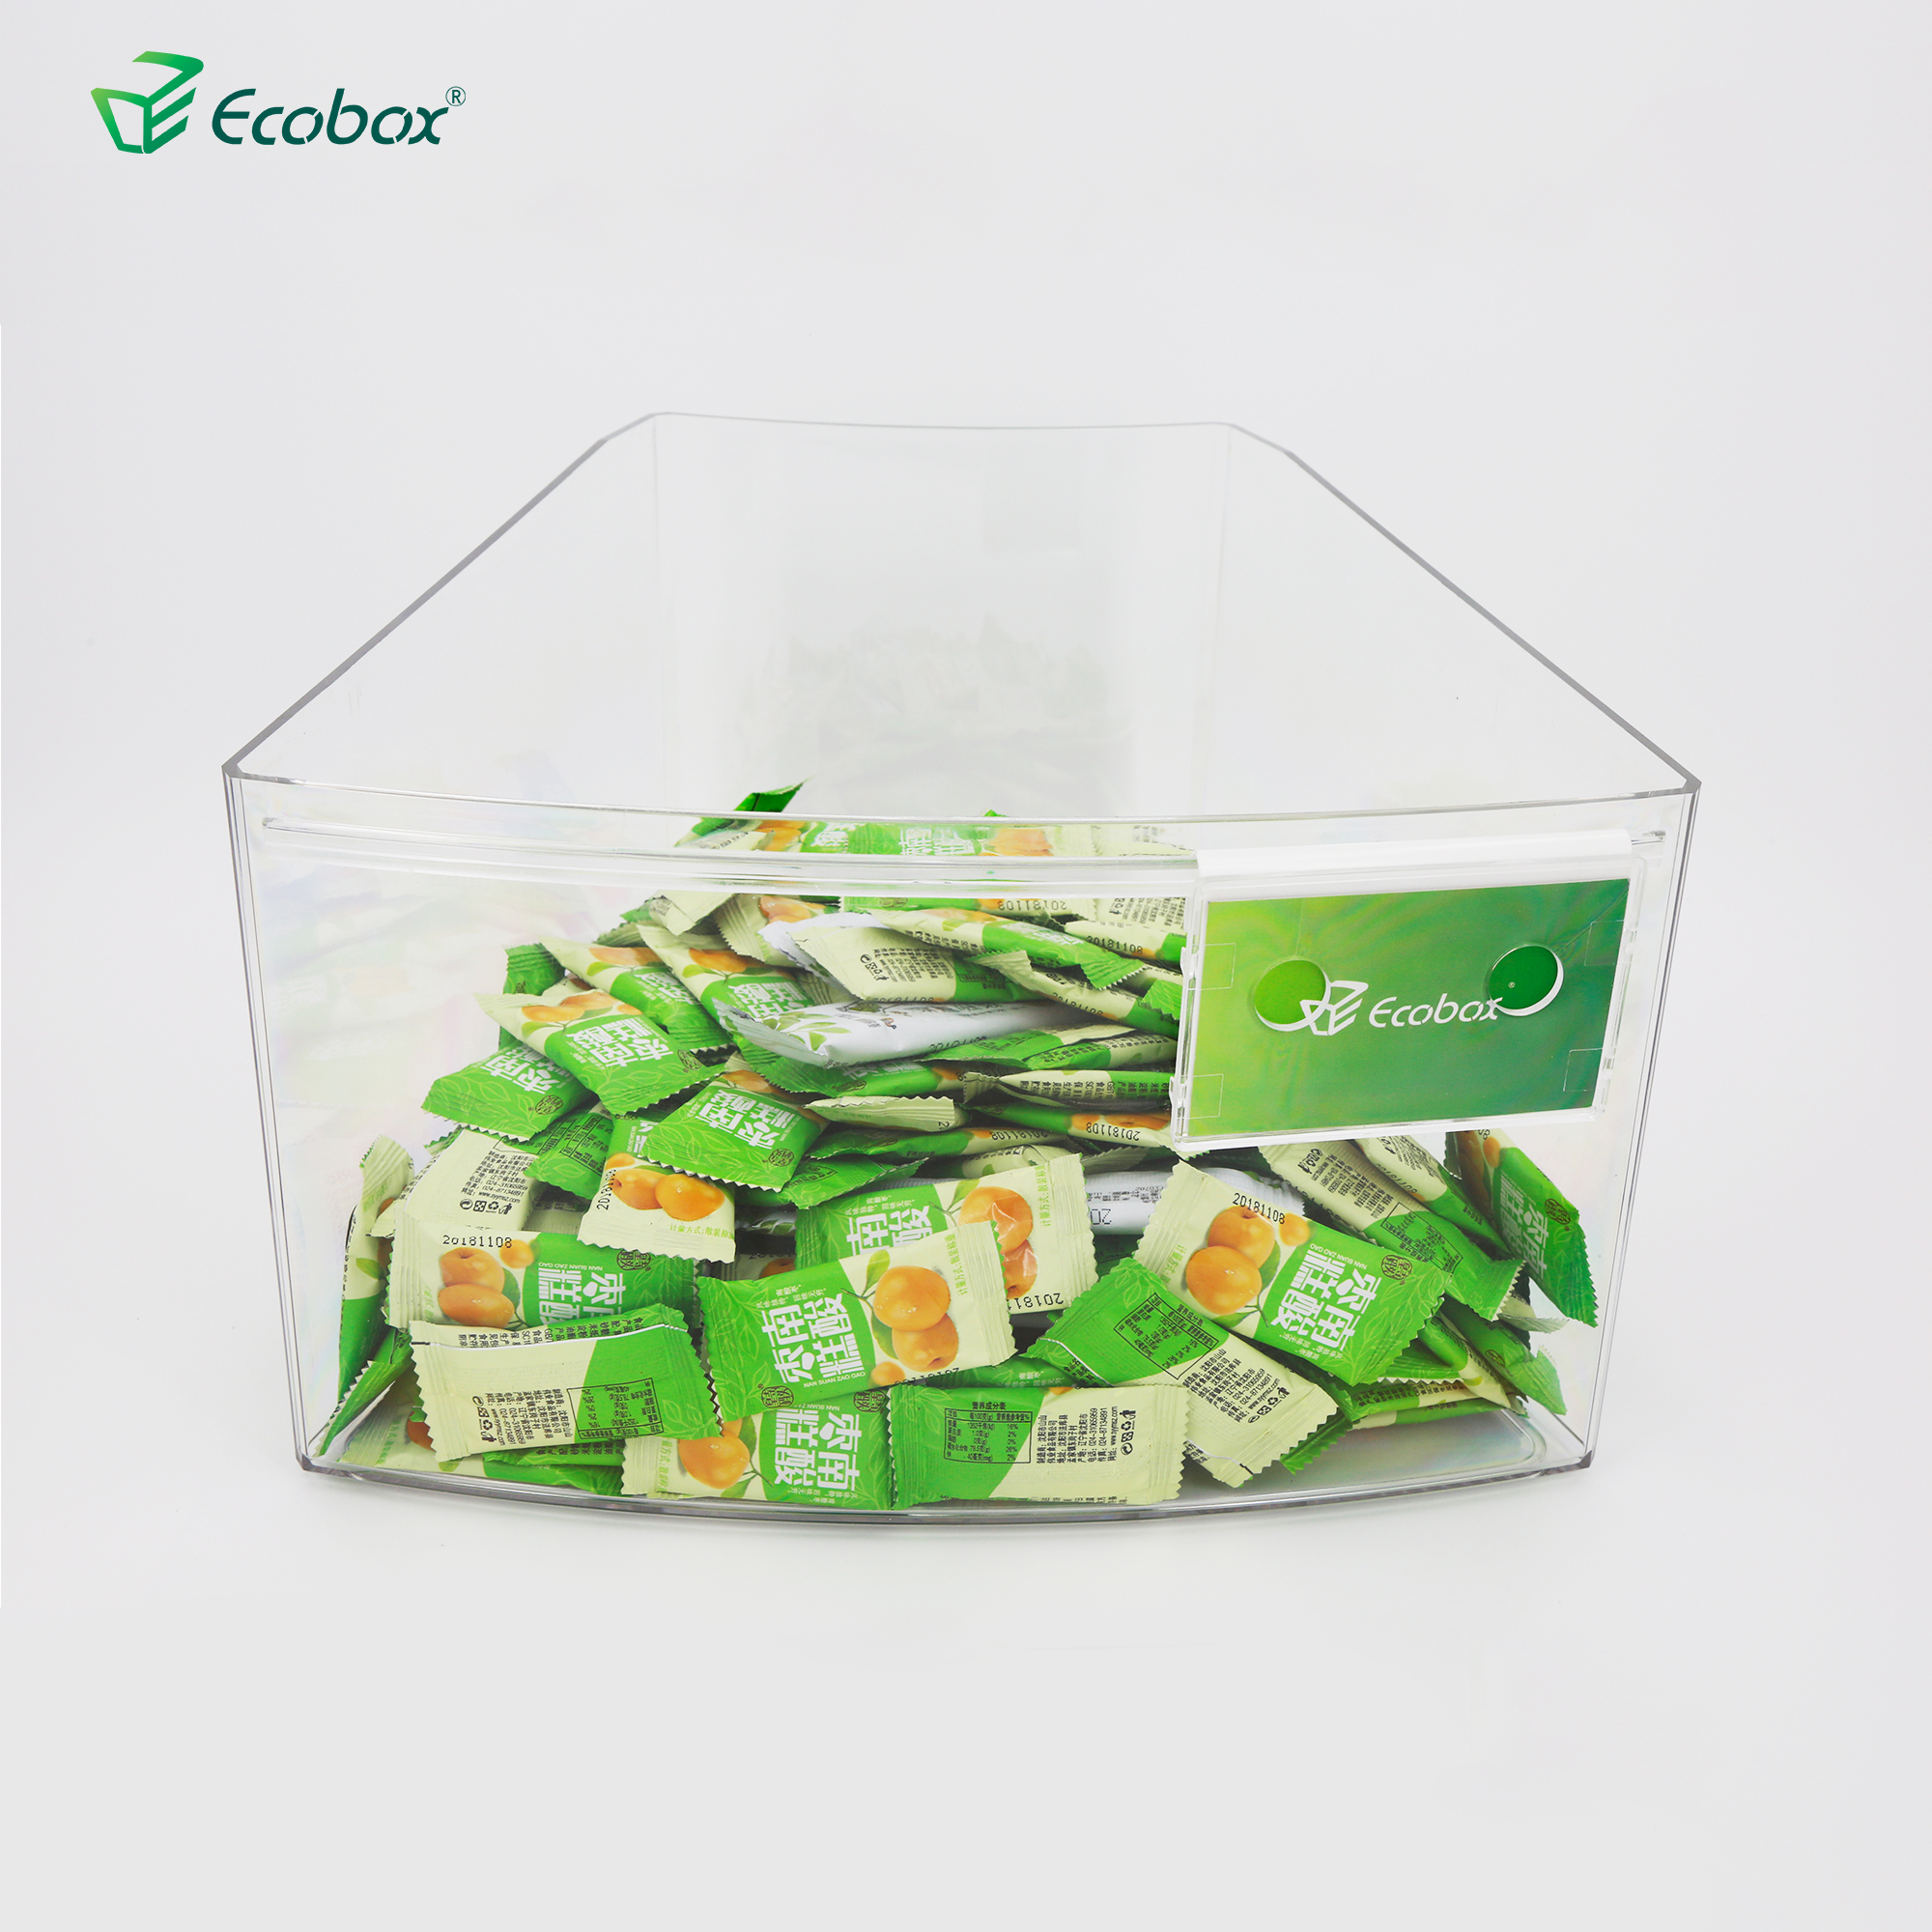 Ecobox SPH-018 supermarket bulk bin for round island shelf 